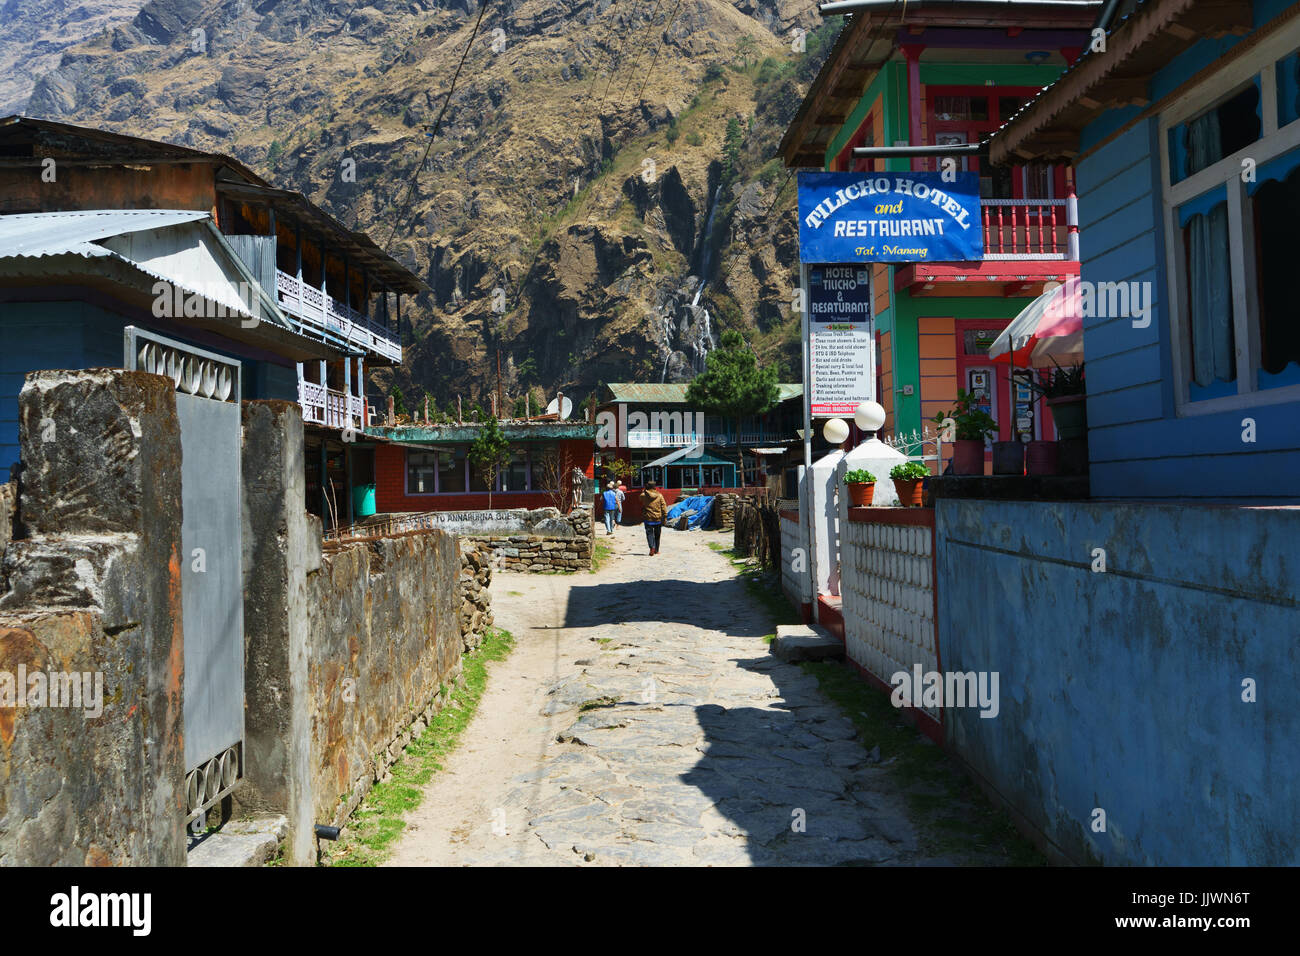 Bahundanda to Tal (1700M) / 6hrs walk / Overnight at mountain lodge'